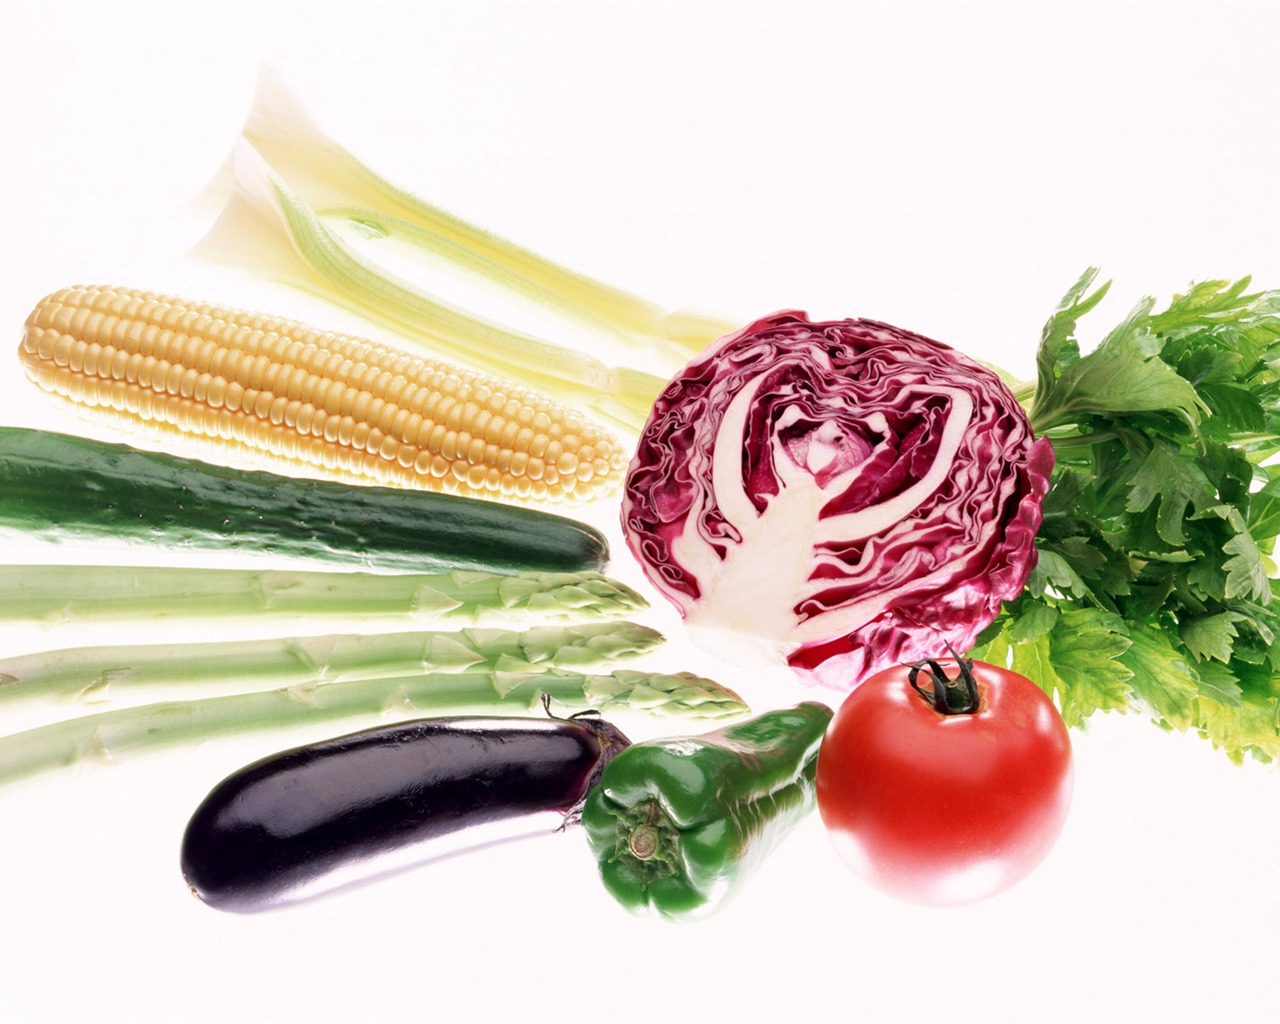 Fond d'écran photo de légumes (1) #17 - 1280x1024